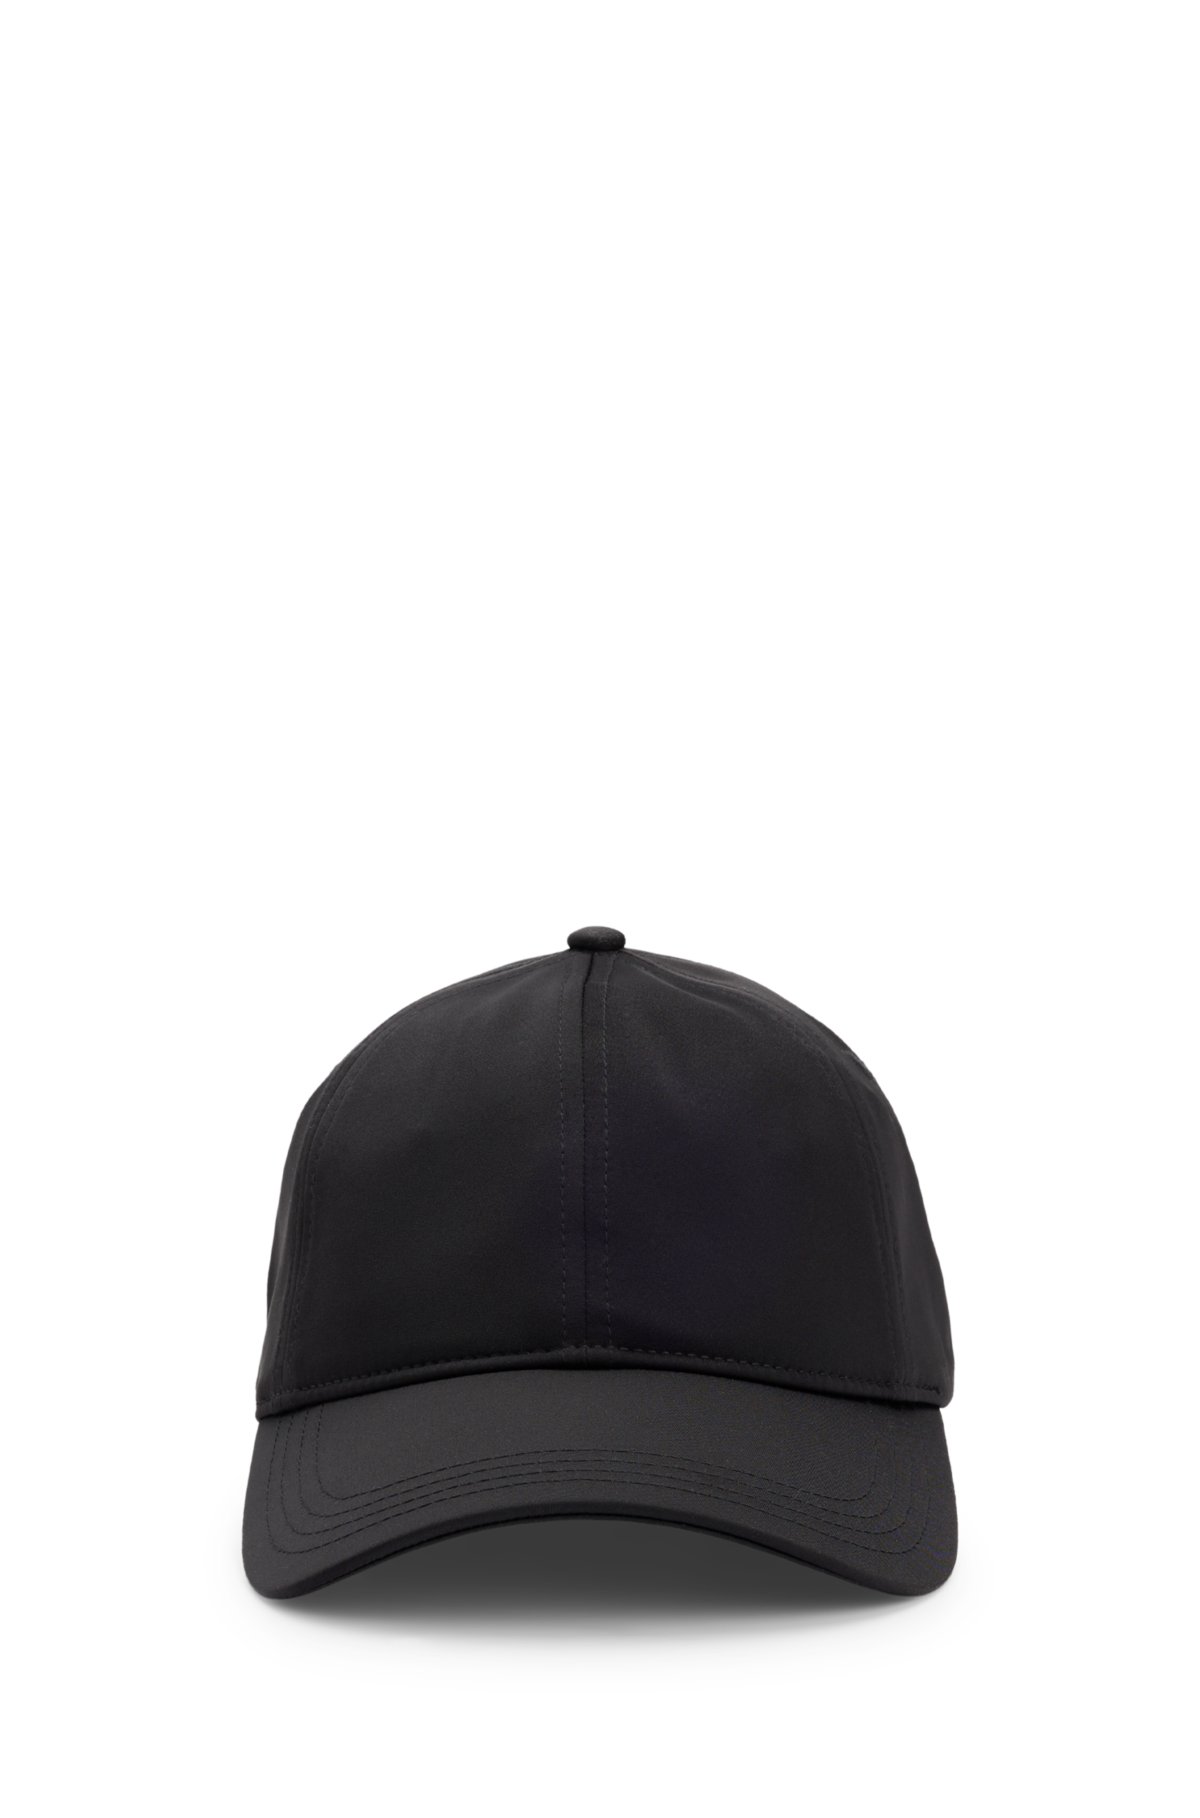 Taffeta cap with satin bow closure, Black